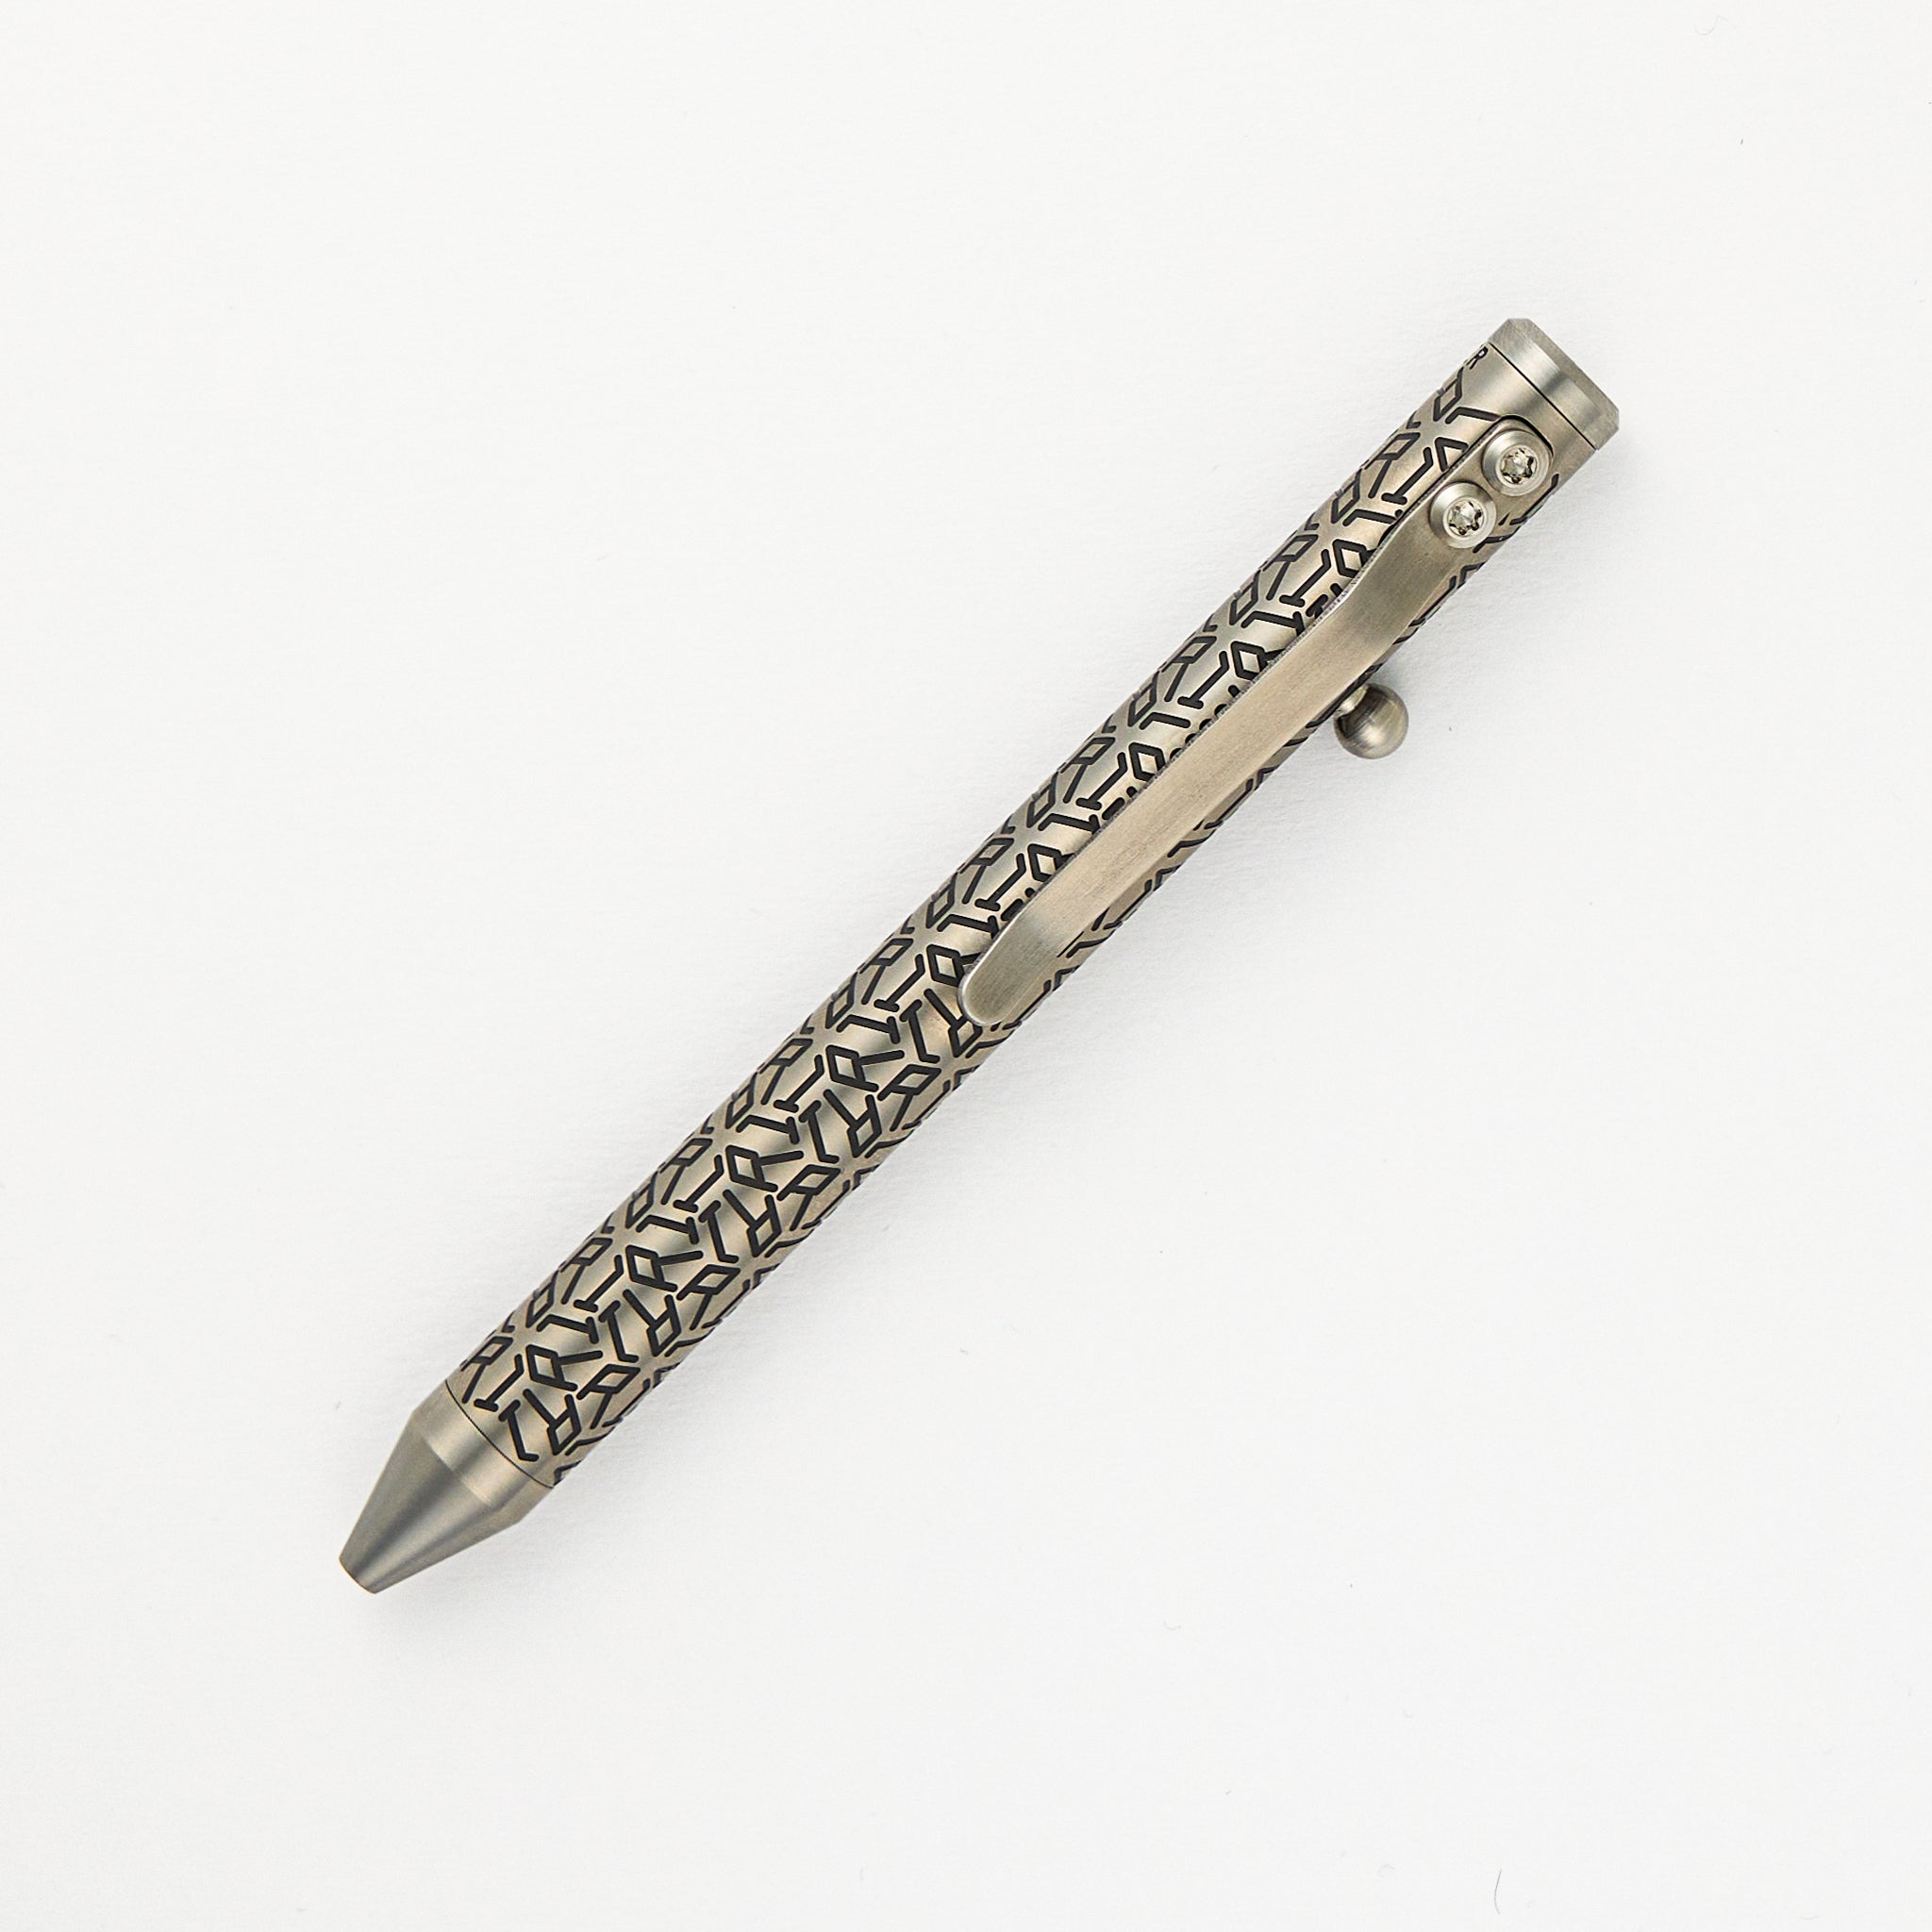 Fellhoelter/Cptn Axel G2 TiBolt Pen – Titanium “Tuxedo” R1P